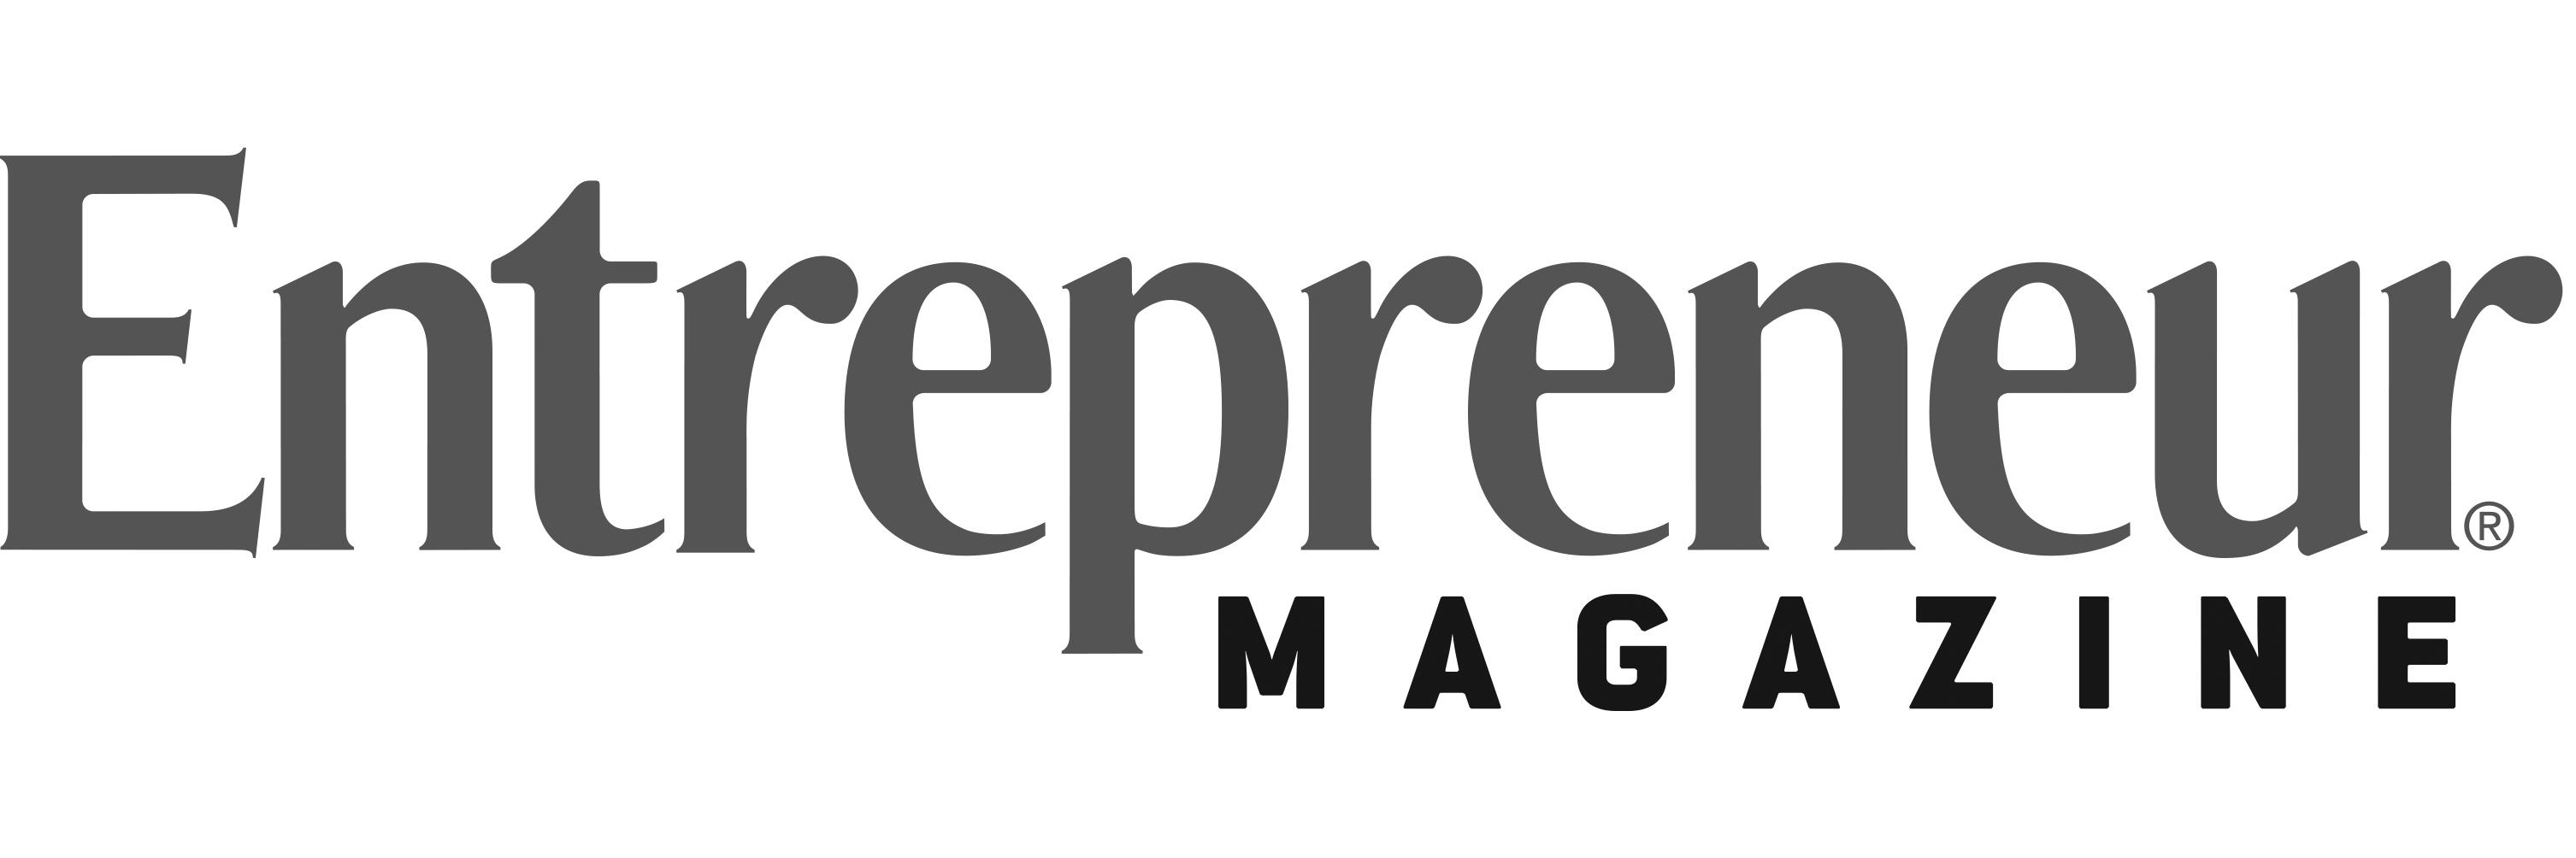 Entrepreneur Logo - entrepreneur magazine logo | M studio